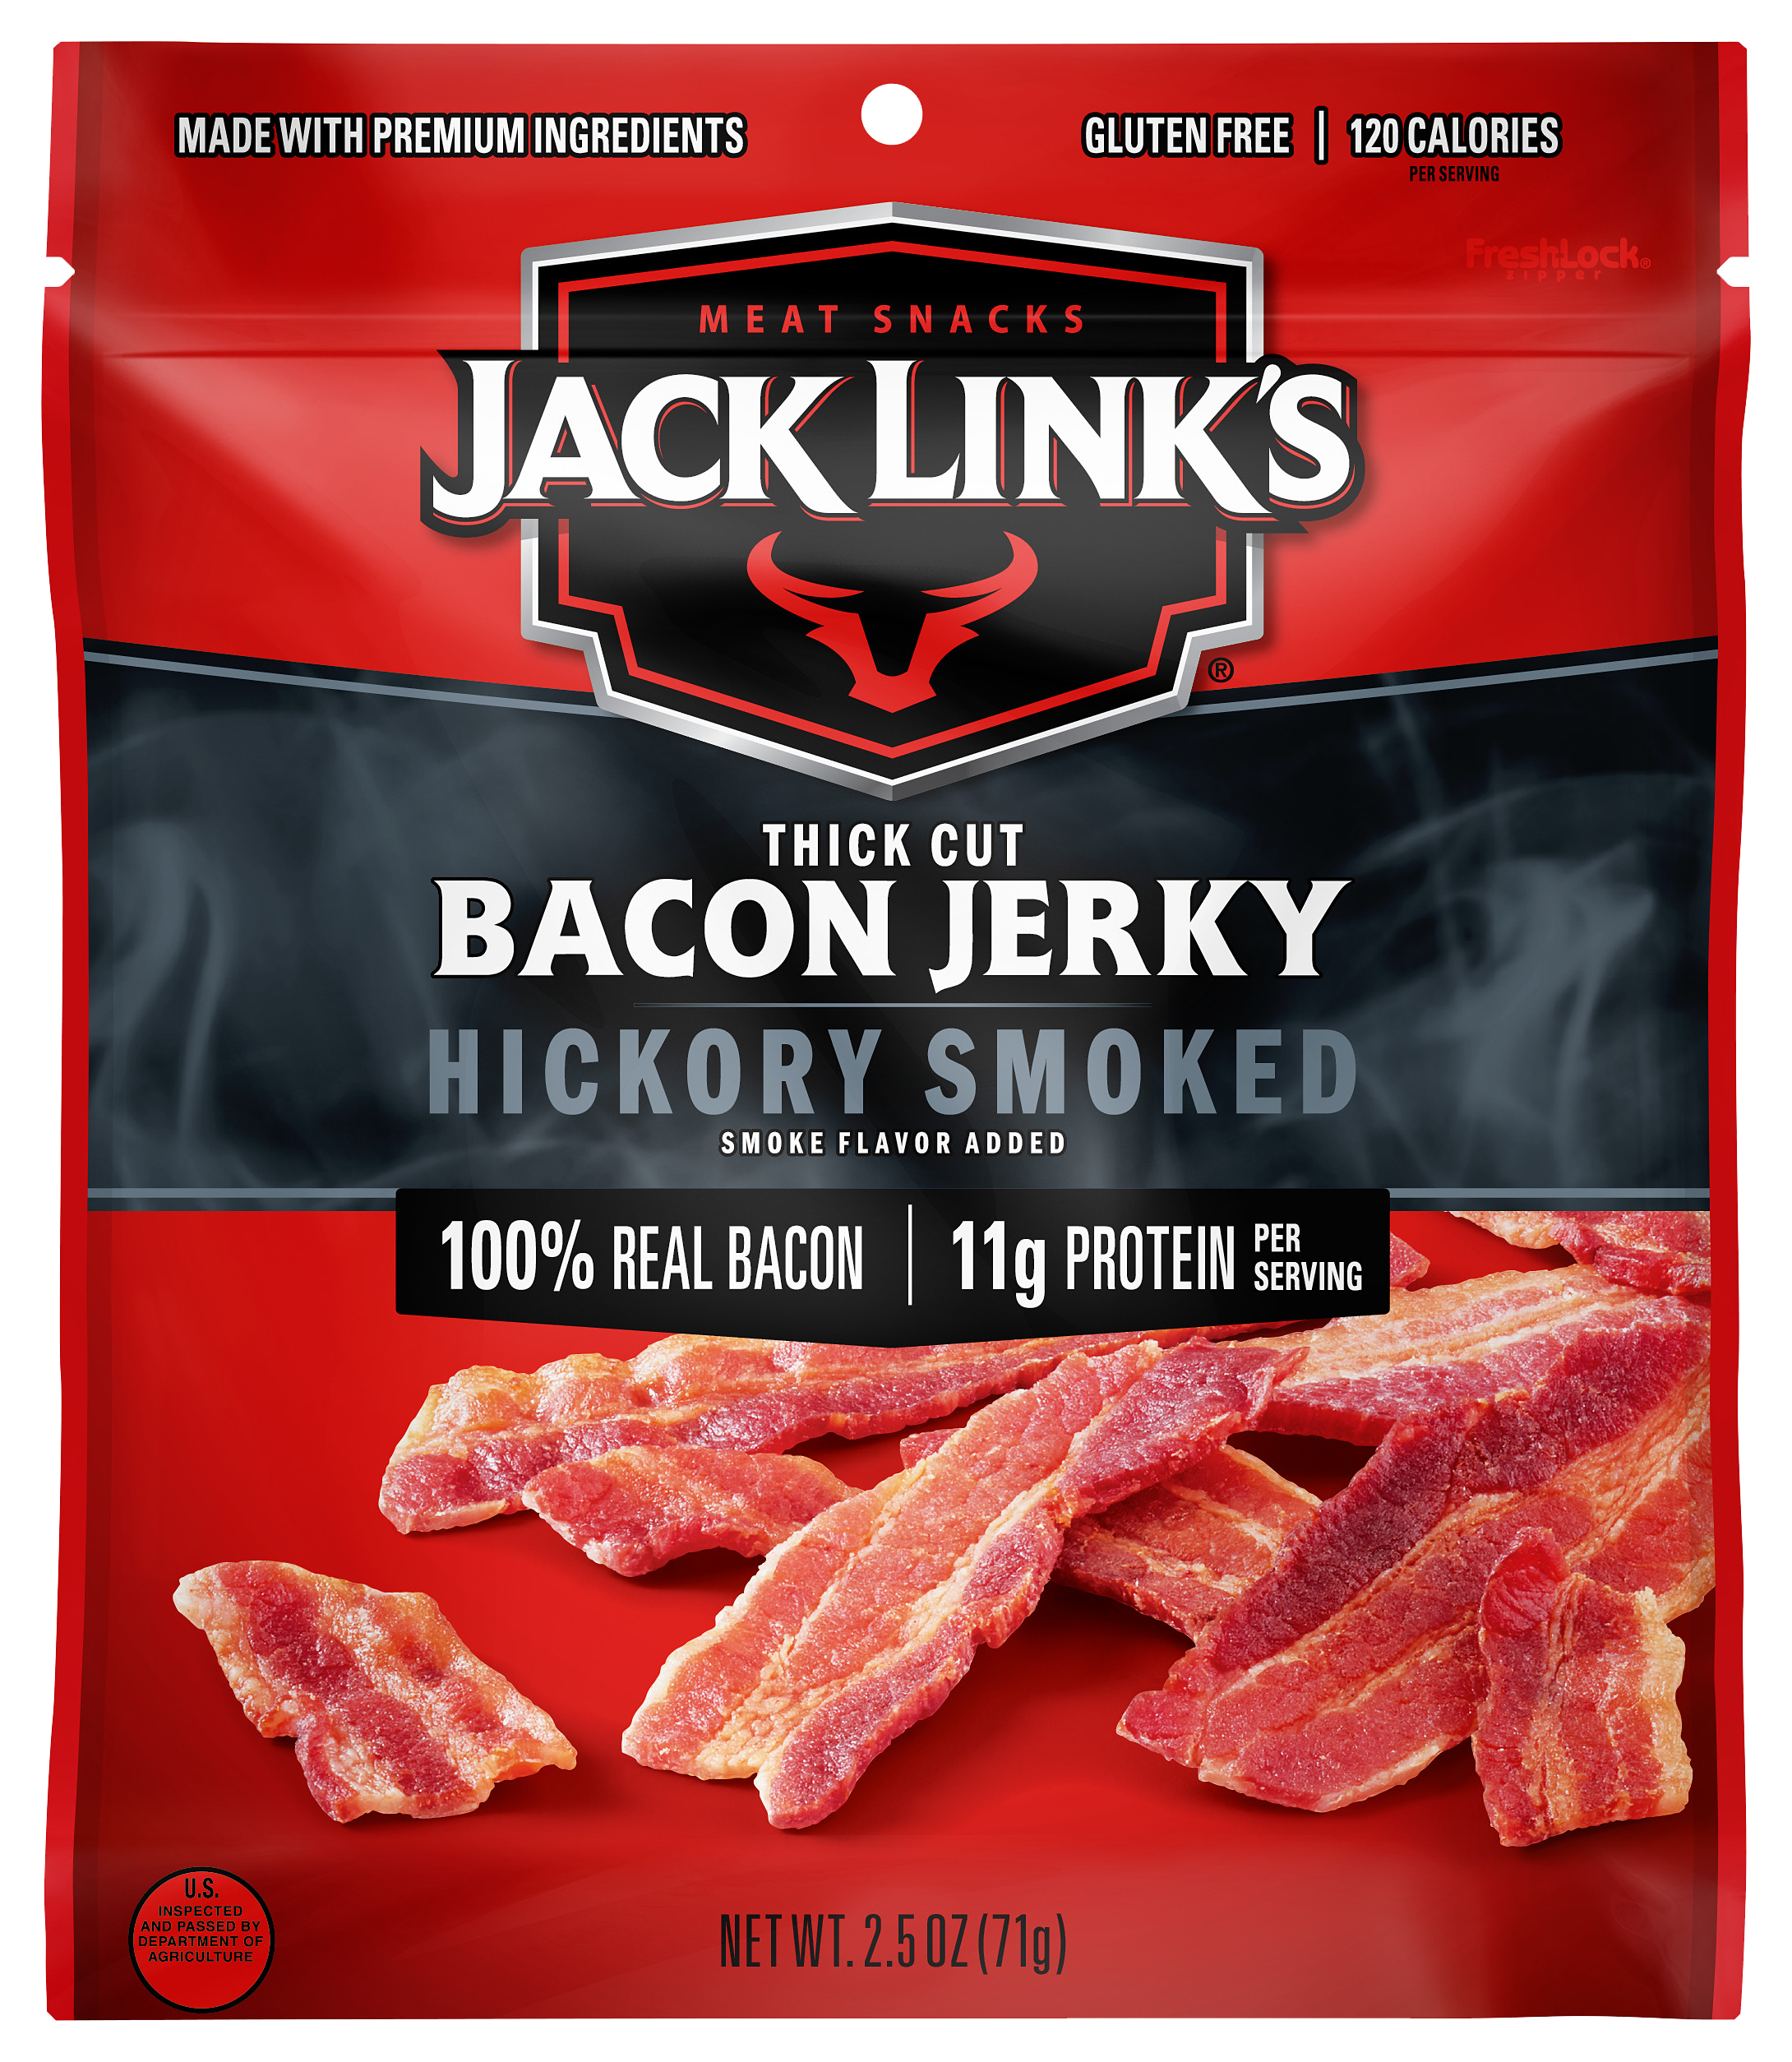 Jack Link's Hickory Smoked Bacon Jerky